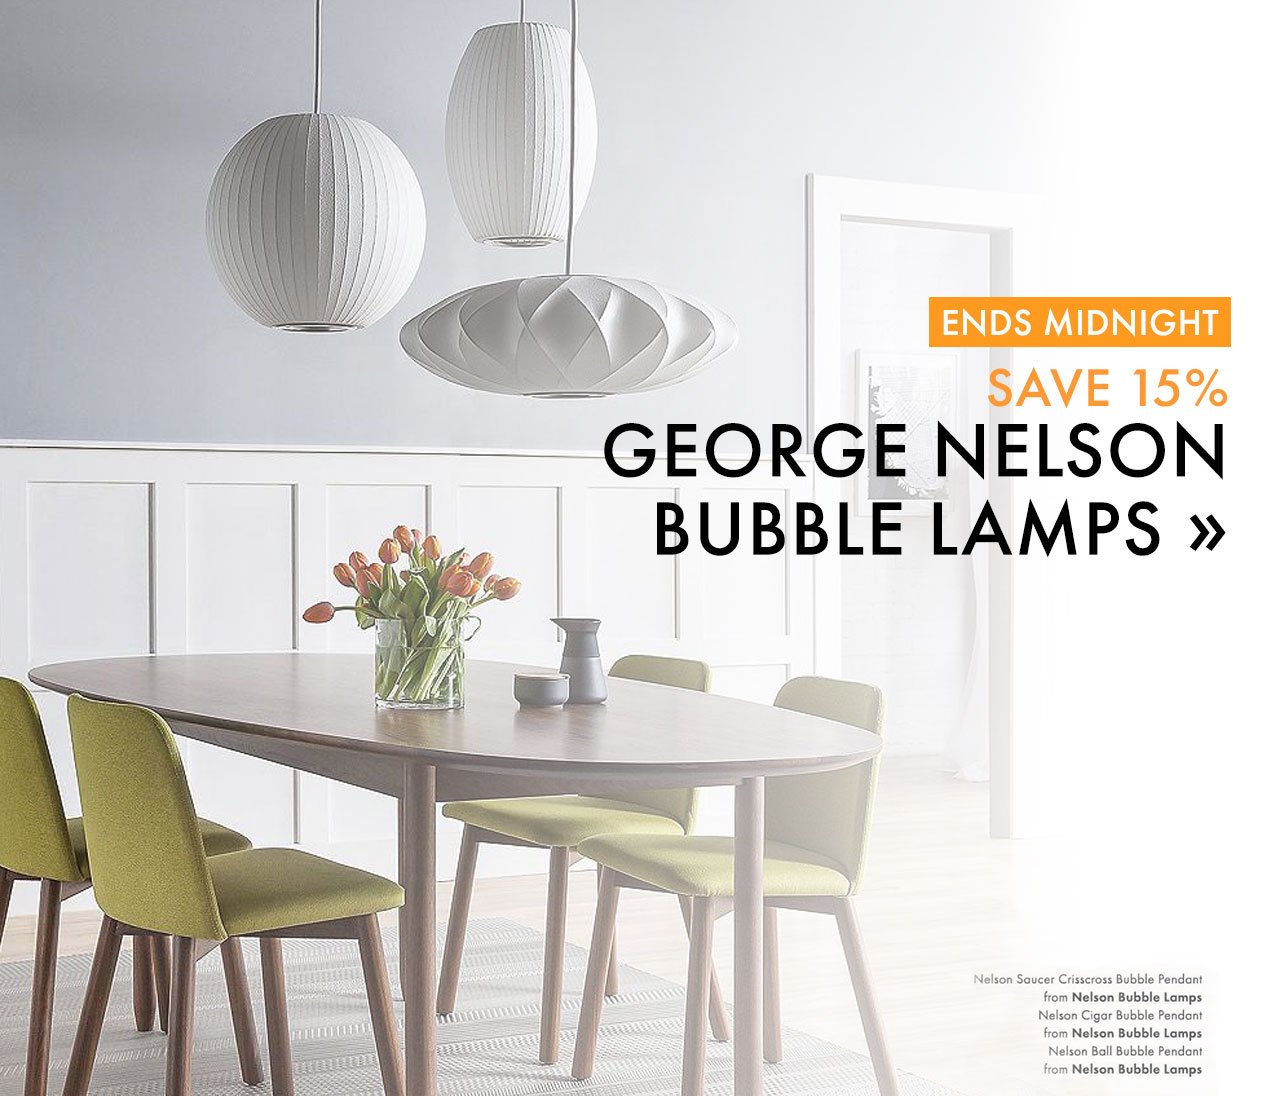 George Nelson Bubble Lamps.